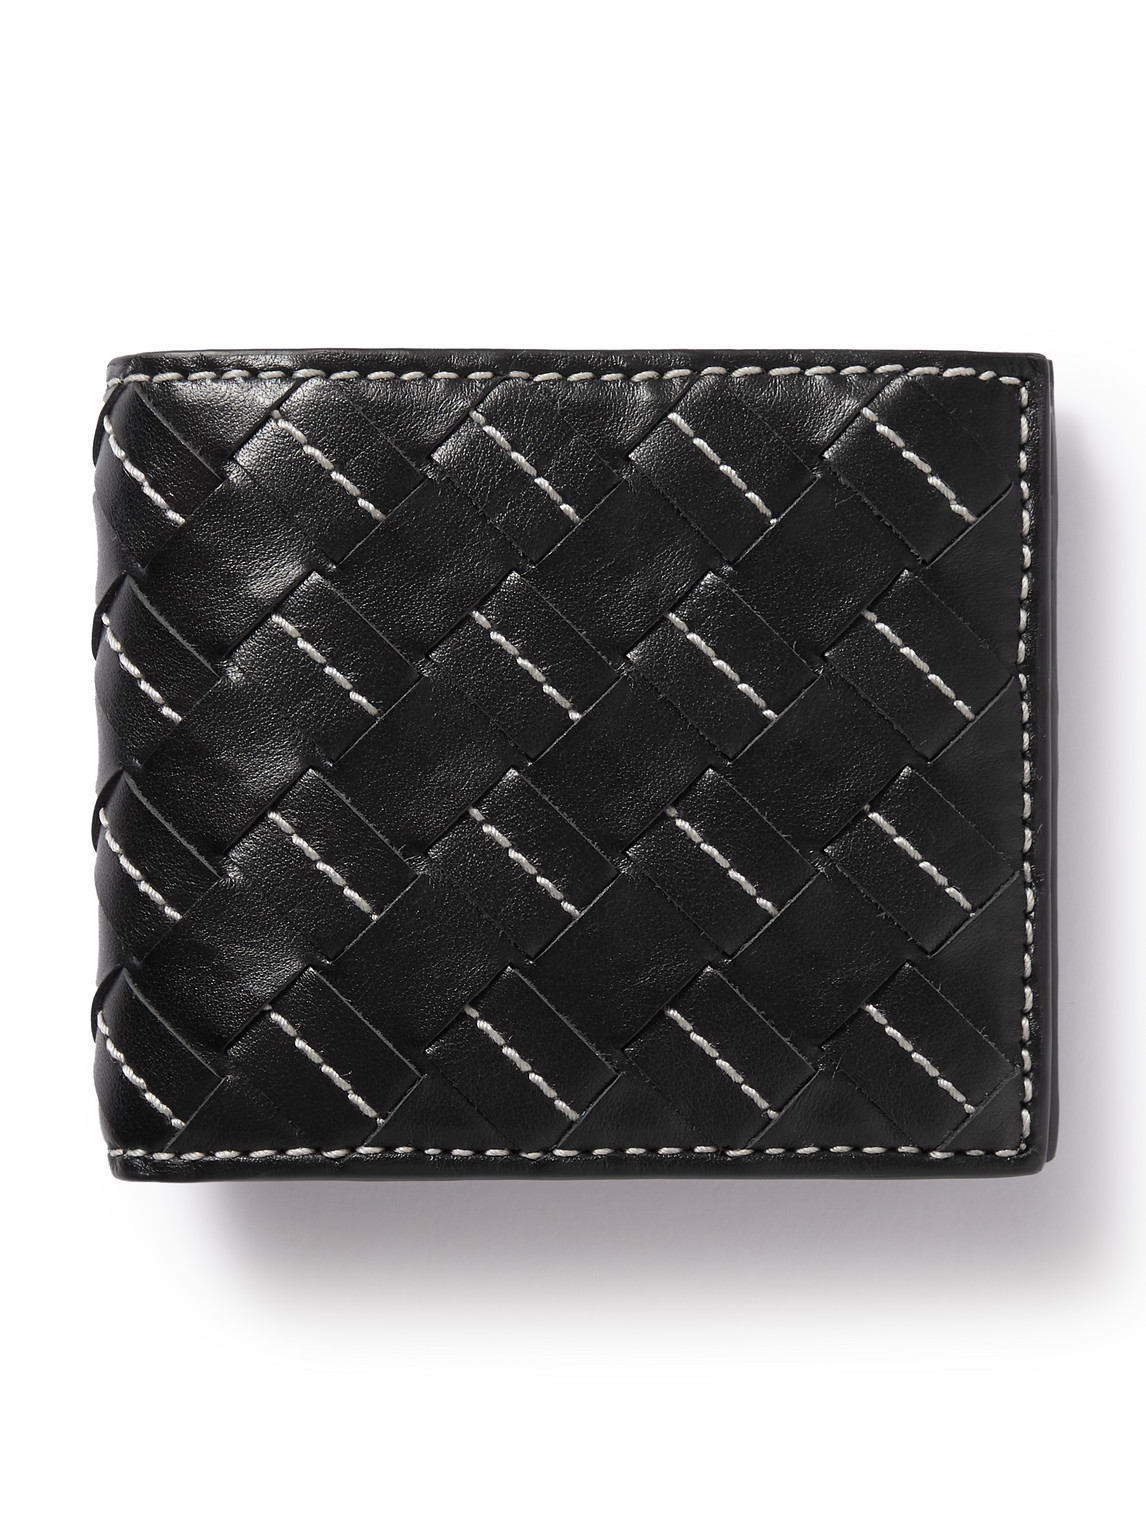 Bottega Veneta Intrecciato Embroidered Leather Billfold Wallet